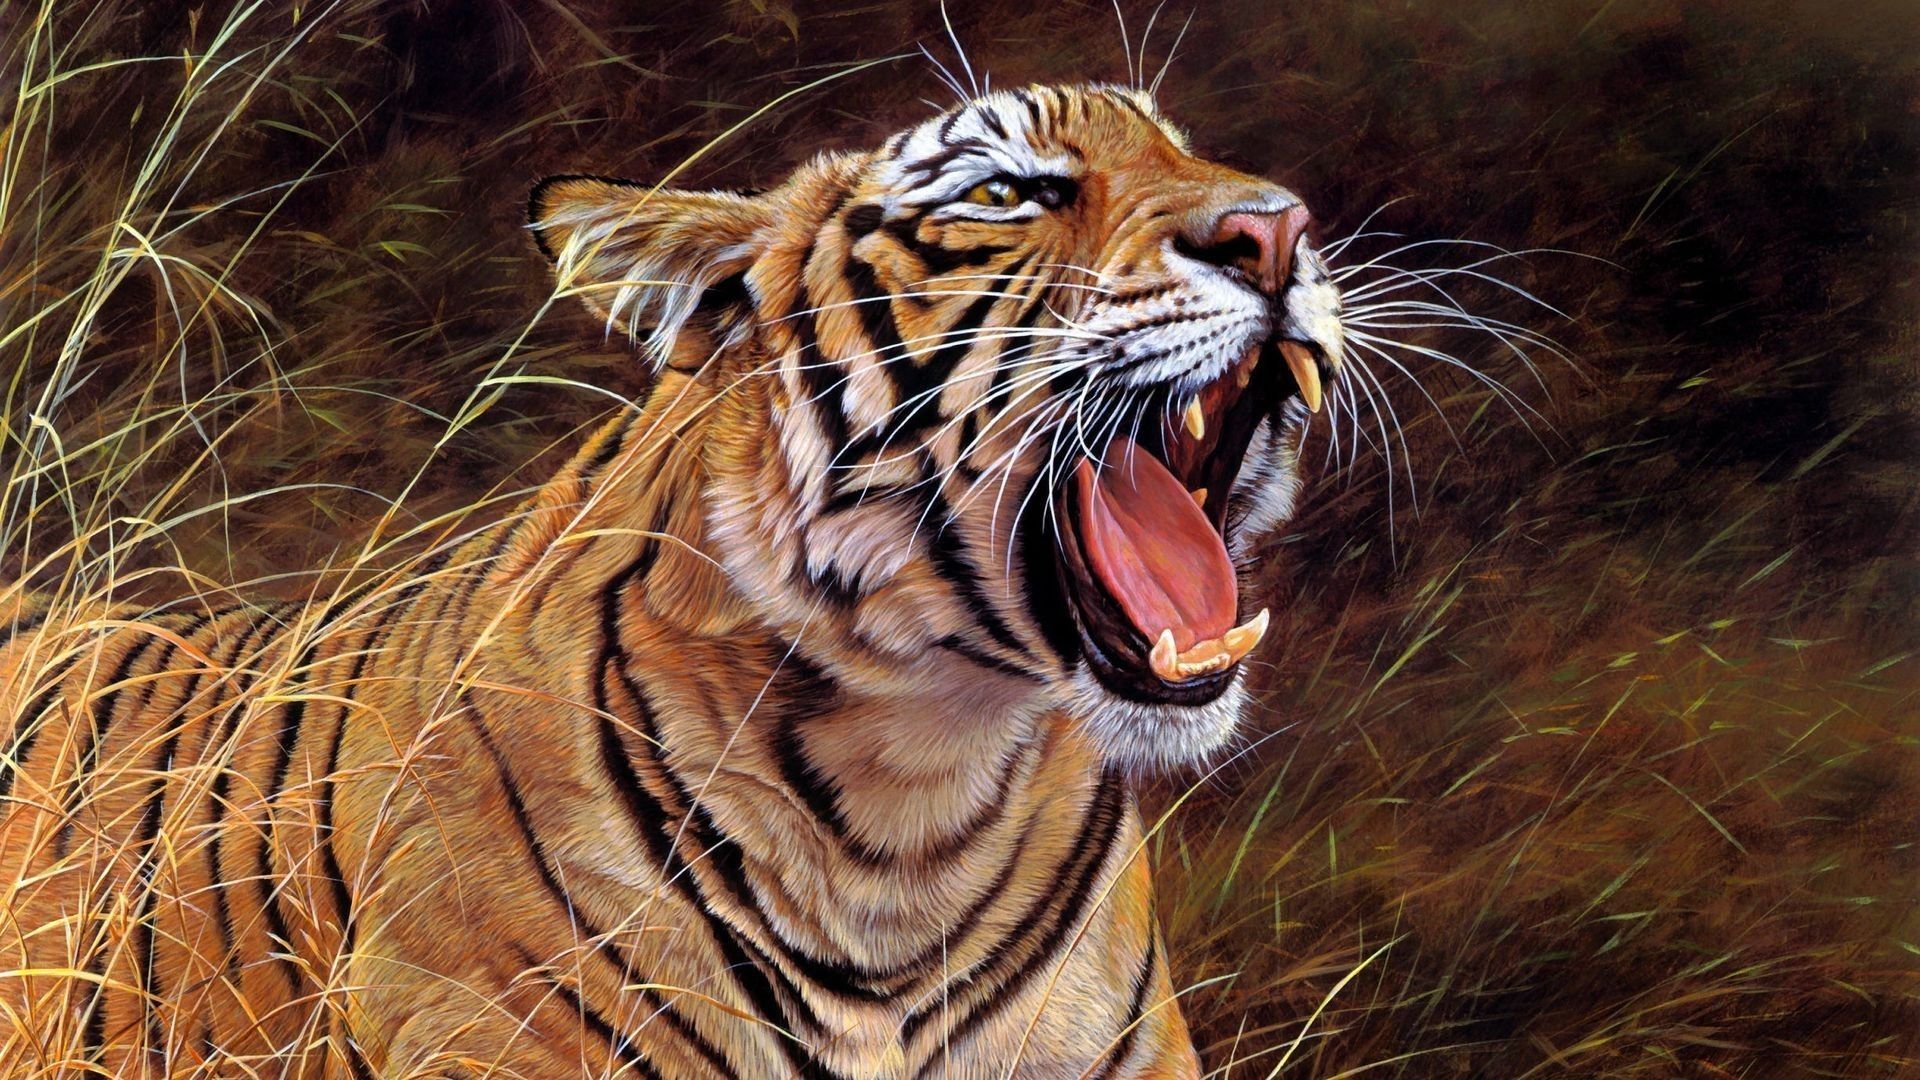 HD-Wallpapers-1080p-Tiger-4.jpg